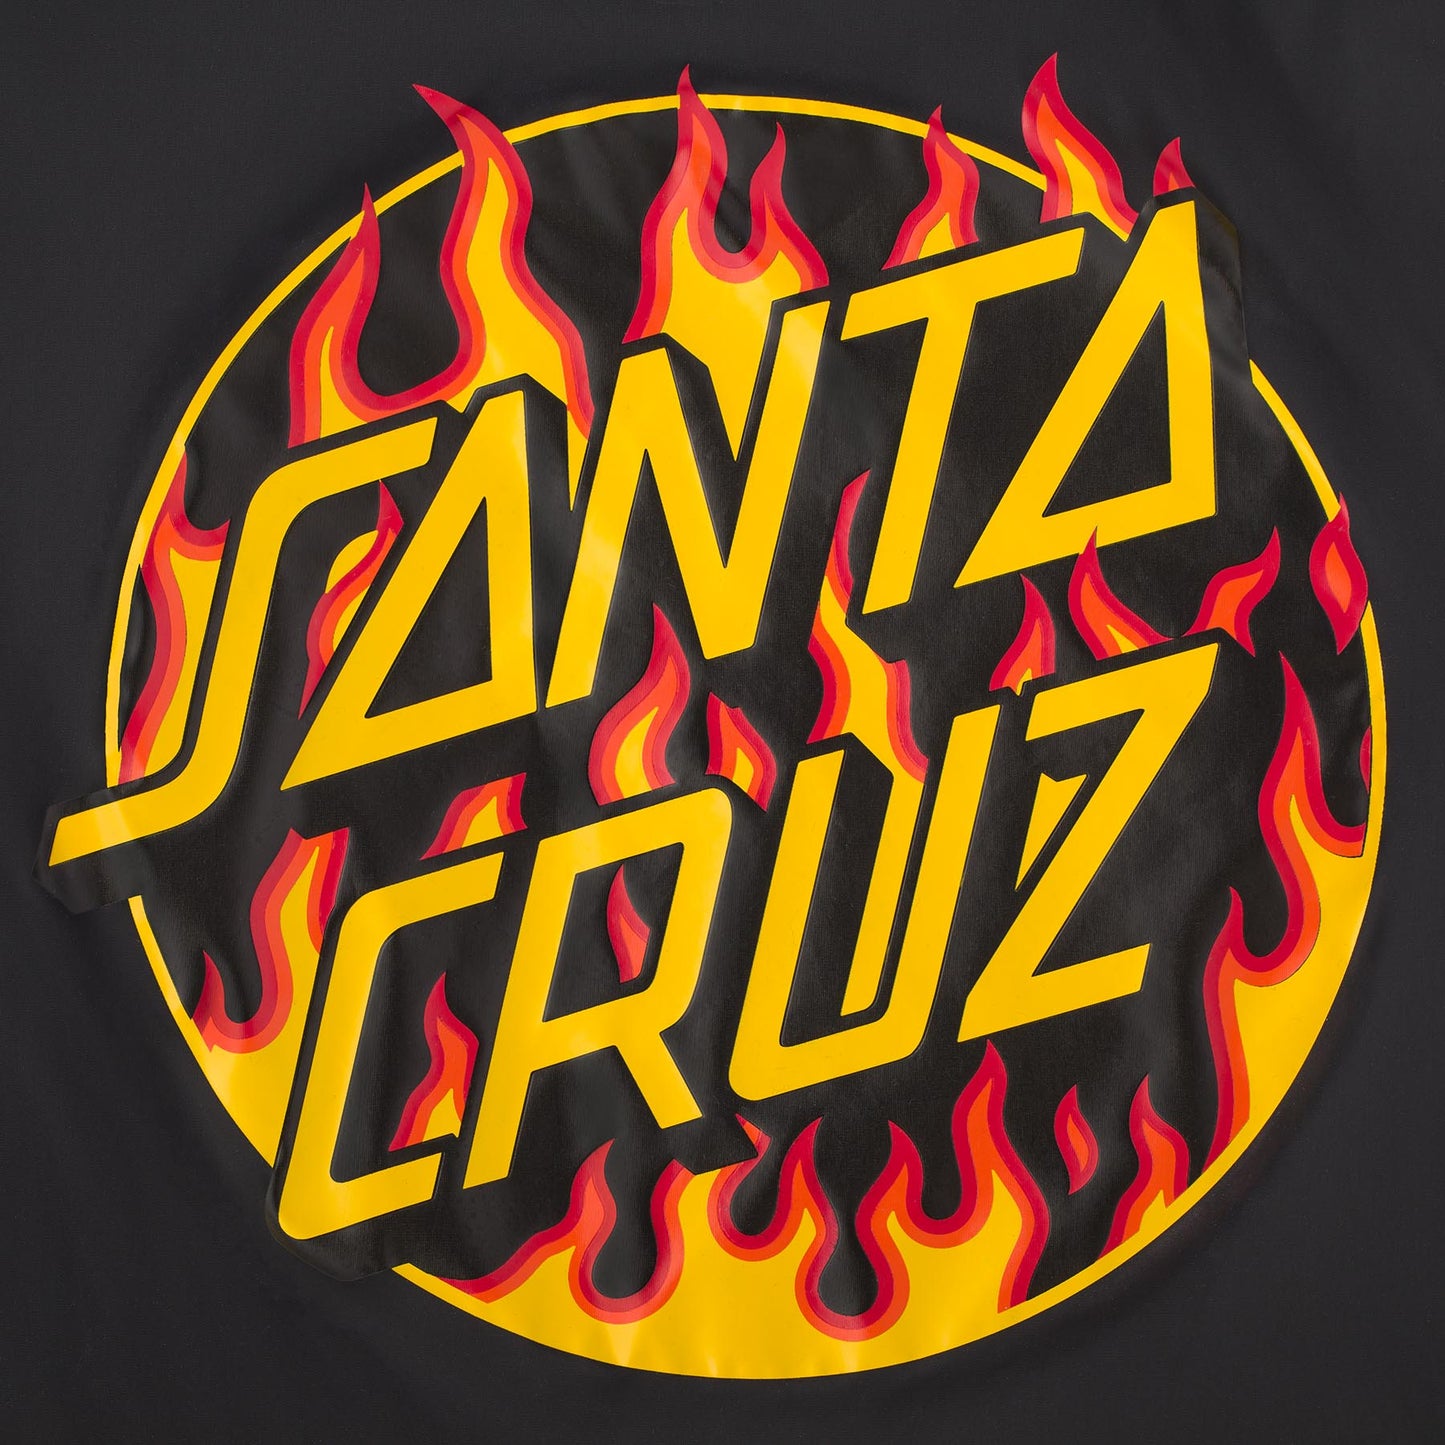 Thrasher Flame Dot Santa Cruz Men's Jacket Black